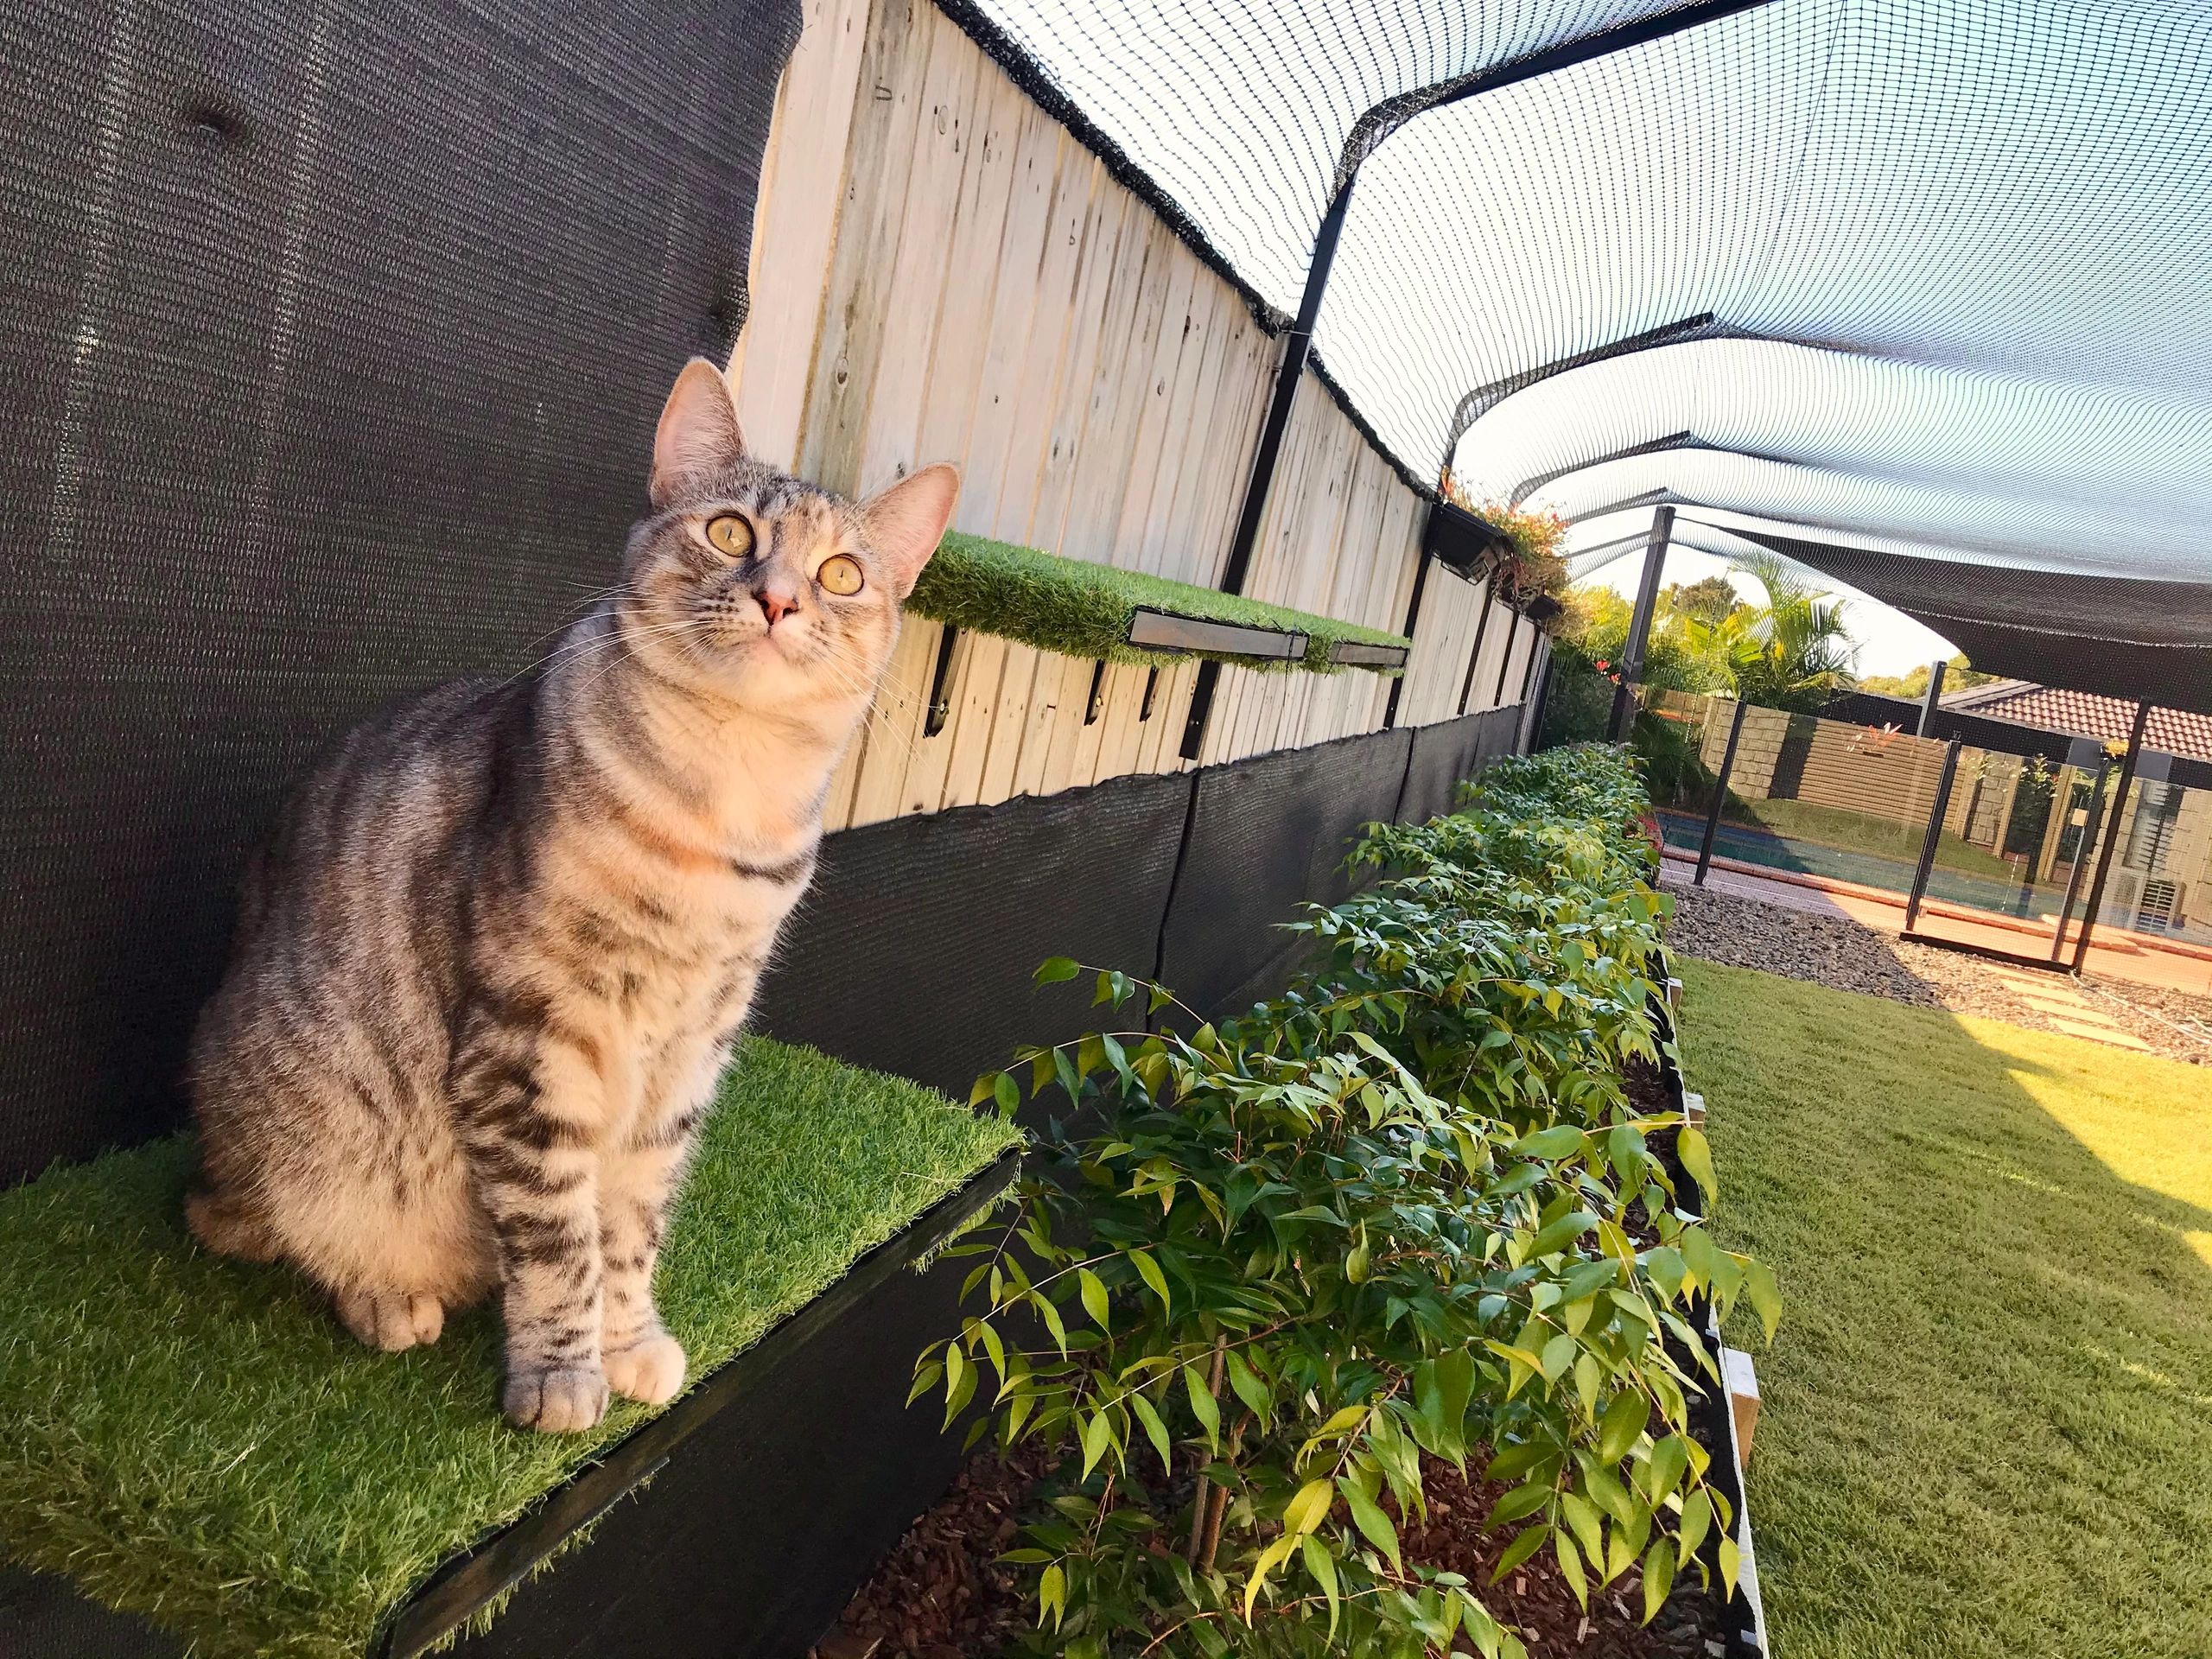 Kitty Cat Enclosures - Cat Enclosures, Cat Netting, Outdoor Cat House